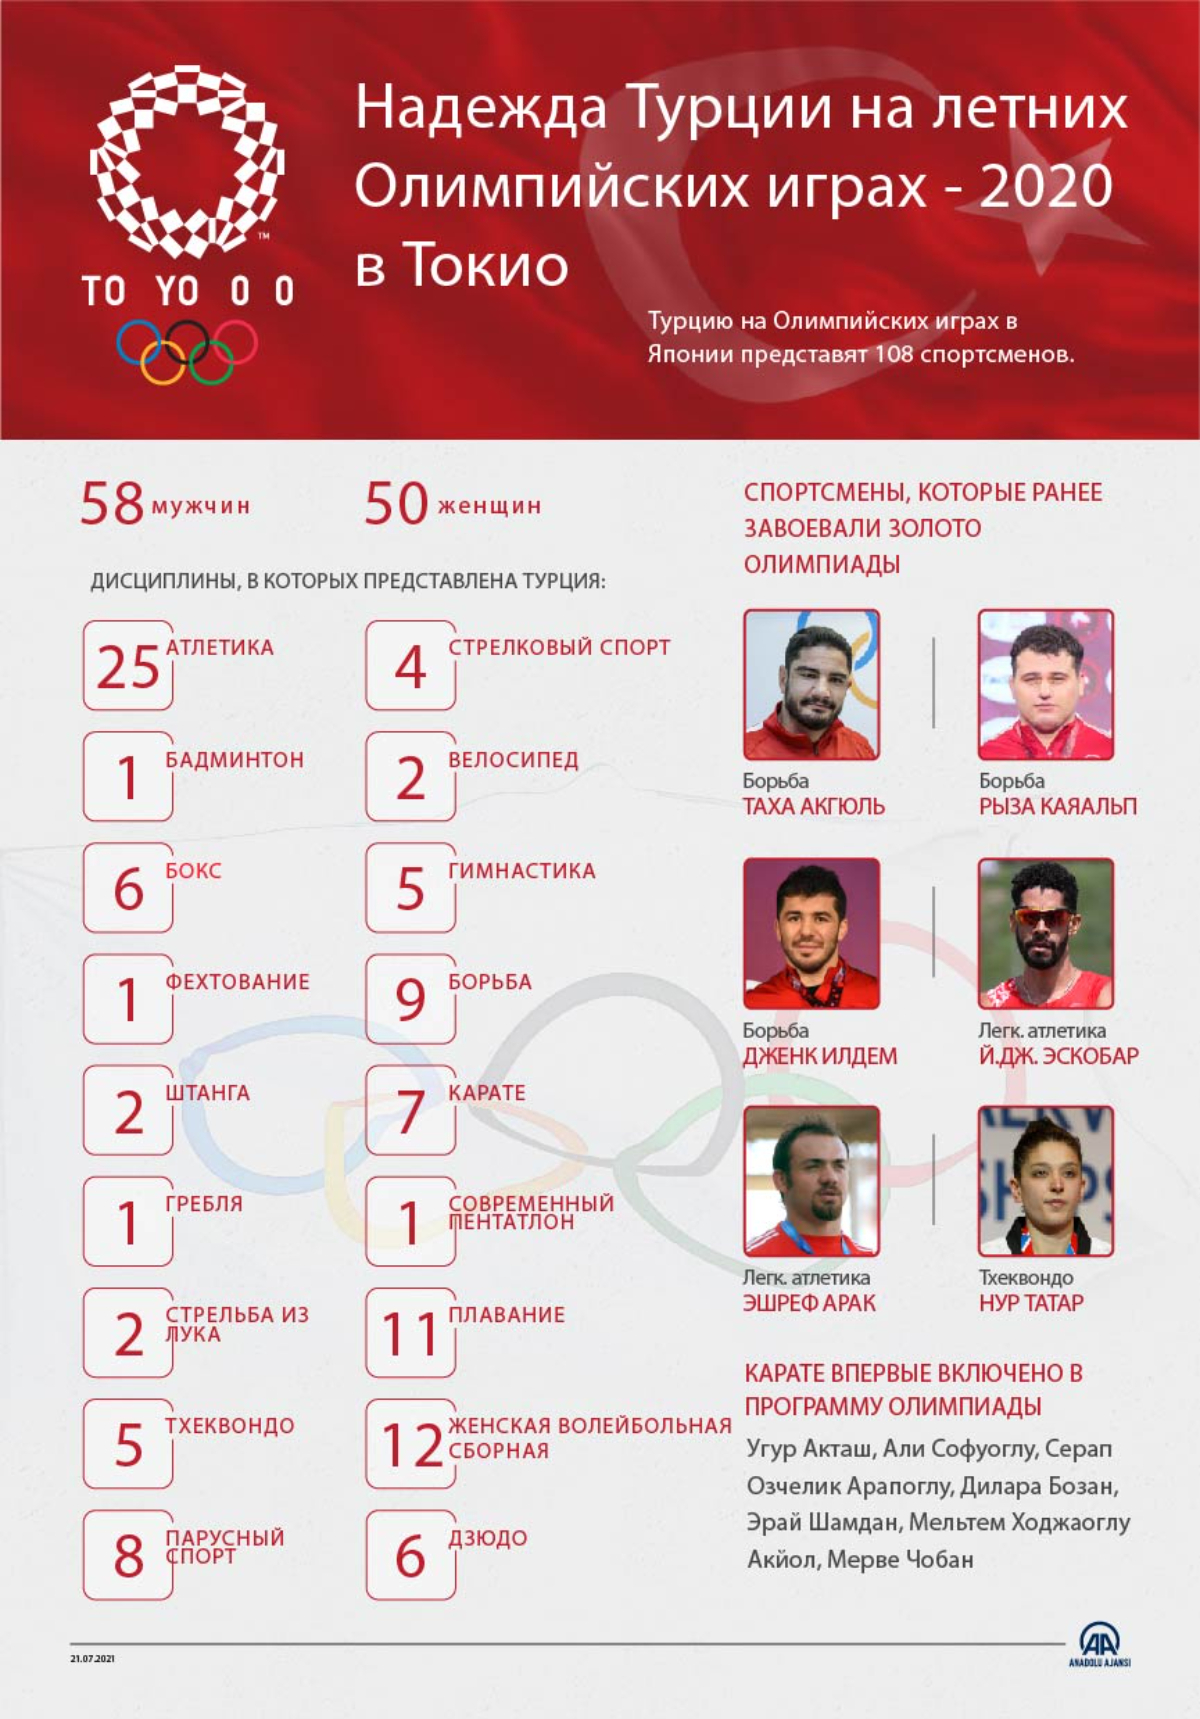 Турцию на Олимпийских играх в Японии представят 108 спортсменов.